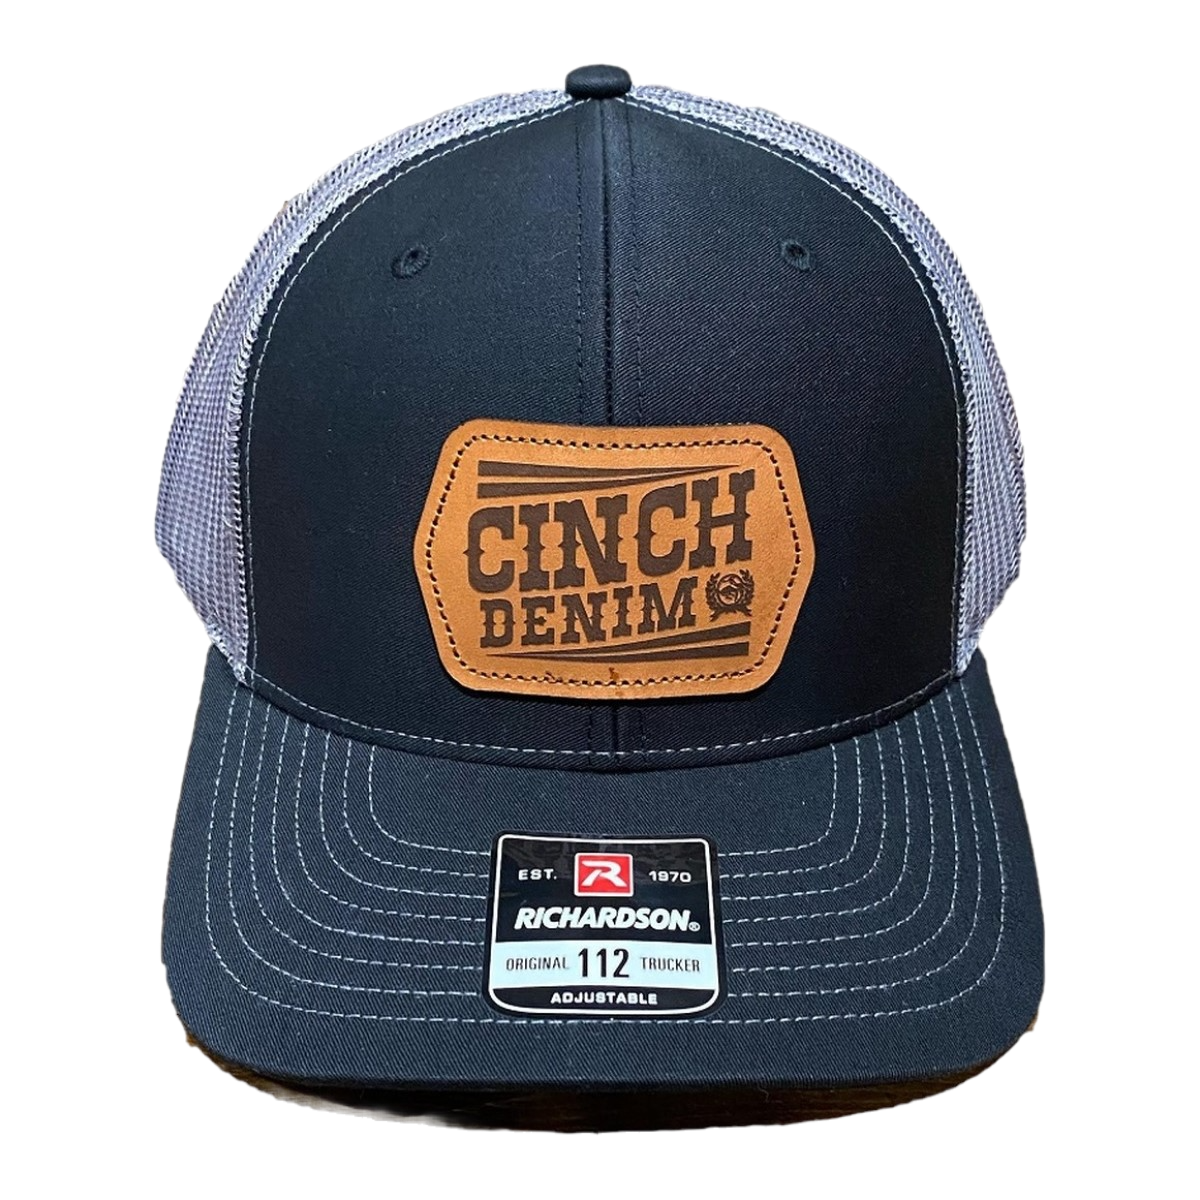 Cinch Men's Black & Grey Mesh Leather Patch Trucker Cap MCC0800011